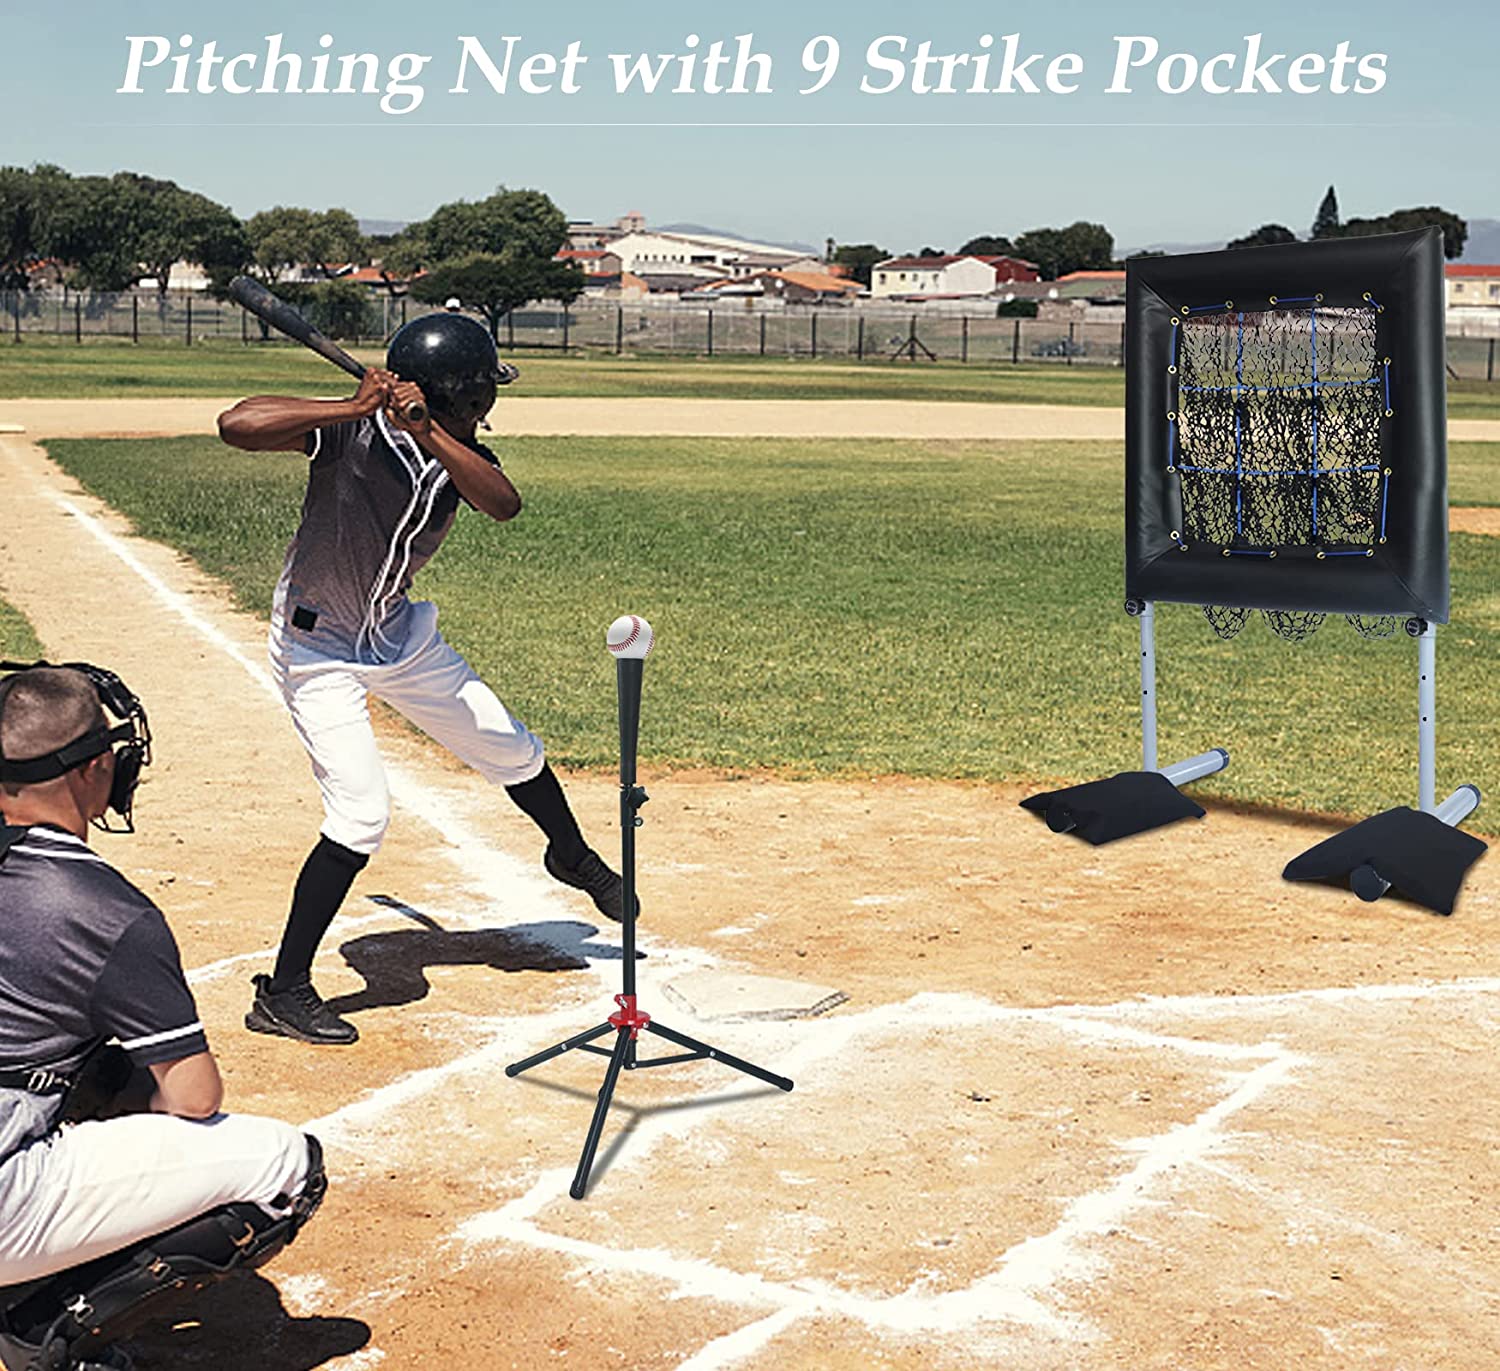 Gagalileo Baseball Pitching Pocket Net,Pitching Pocket with 9 Target Strike Zone,Portable Baseball Pitching Training Equipment,Softball Pitching Net with Strike Zone,Adjustable Height Trainer